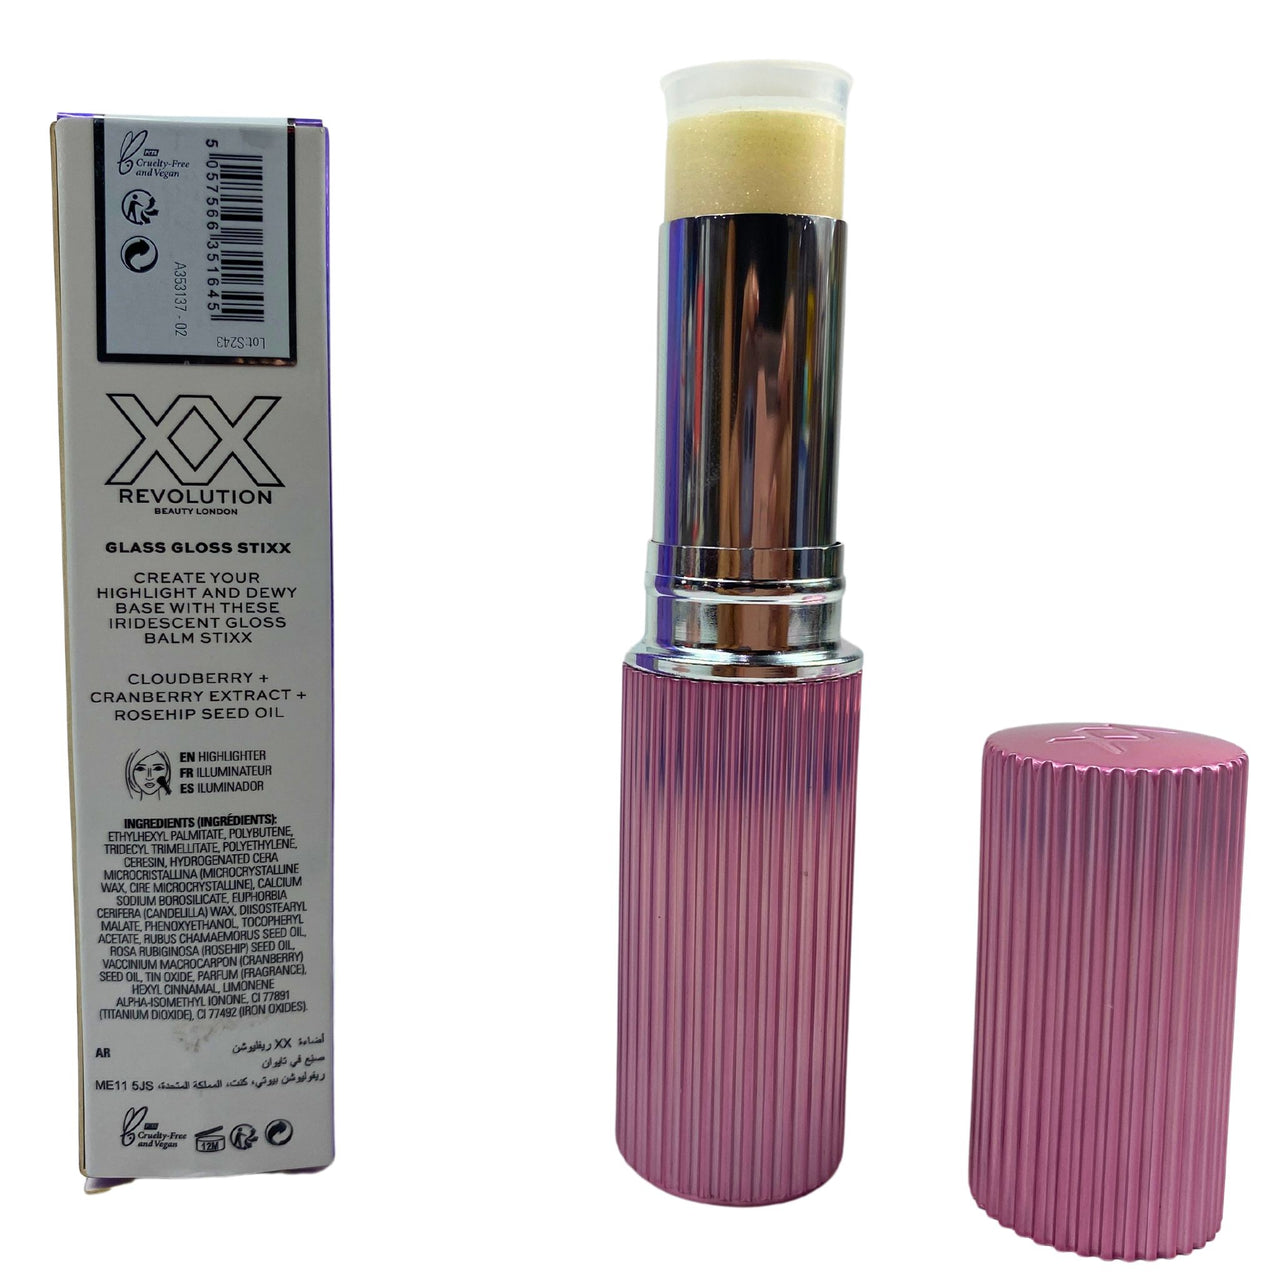 XX Revolution Glass Gloss Stixx Translucent Highlighter